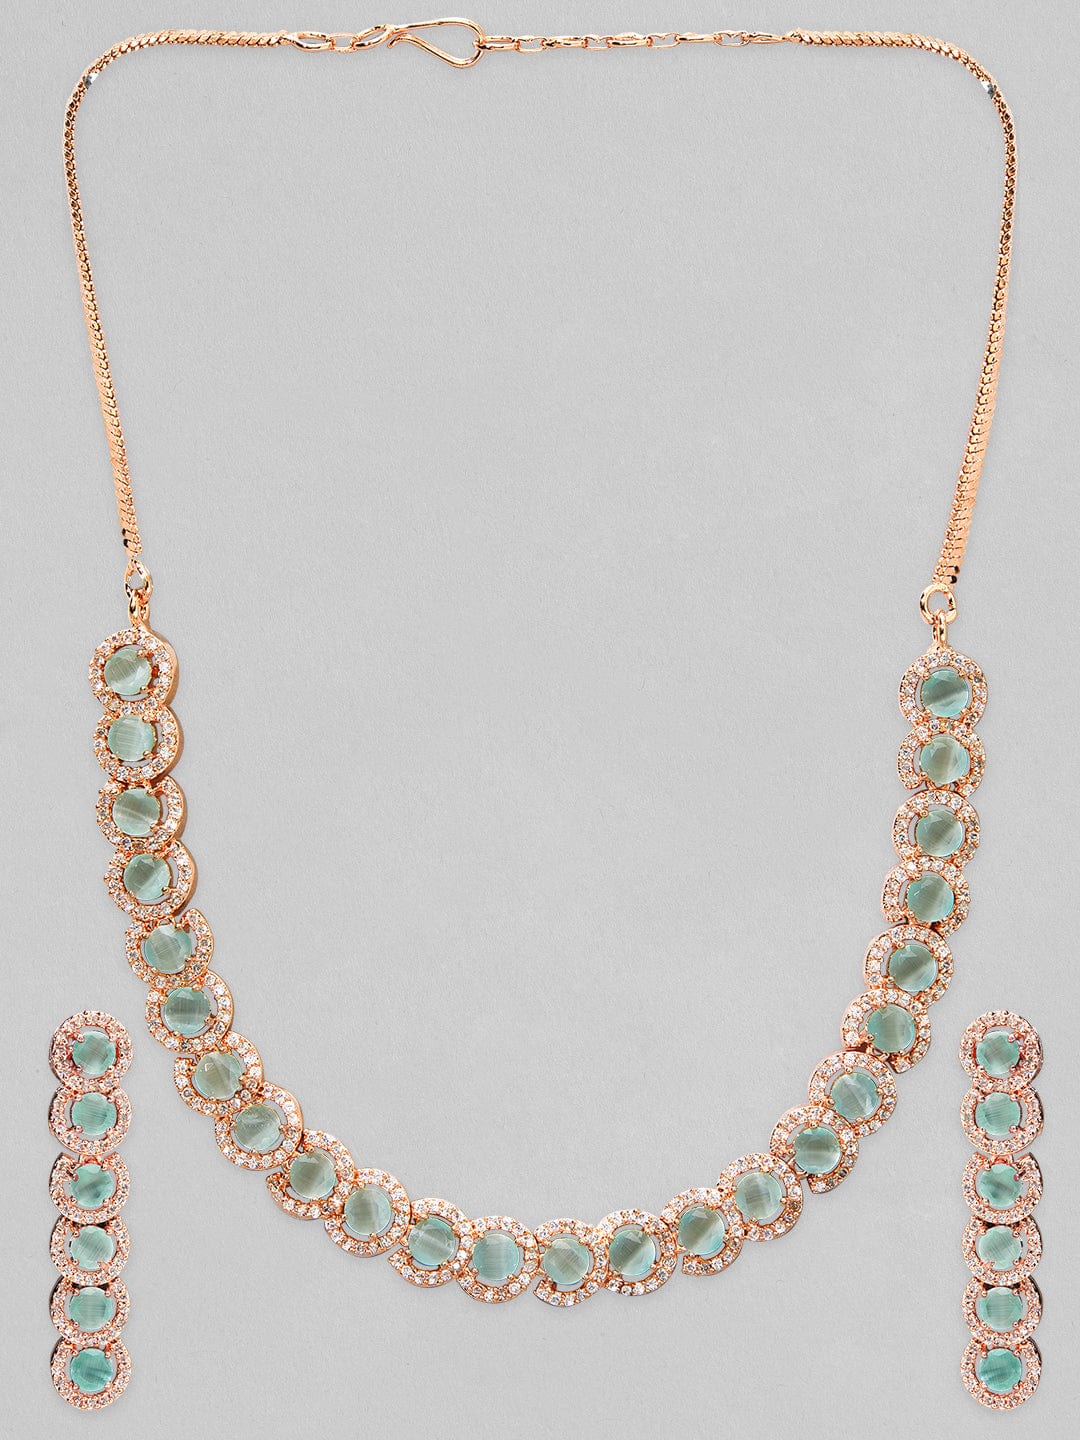 Rubans 22k Gold-Plated Emerald & AD Studded Necklace Jewellery Set Necklace Set